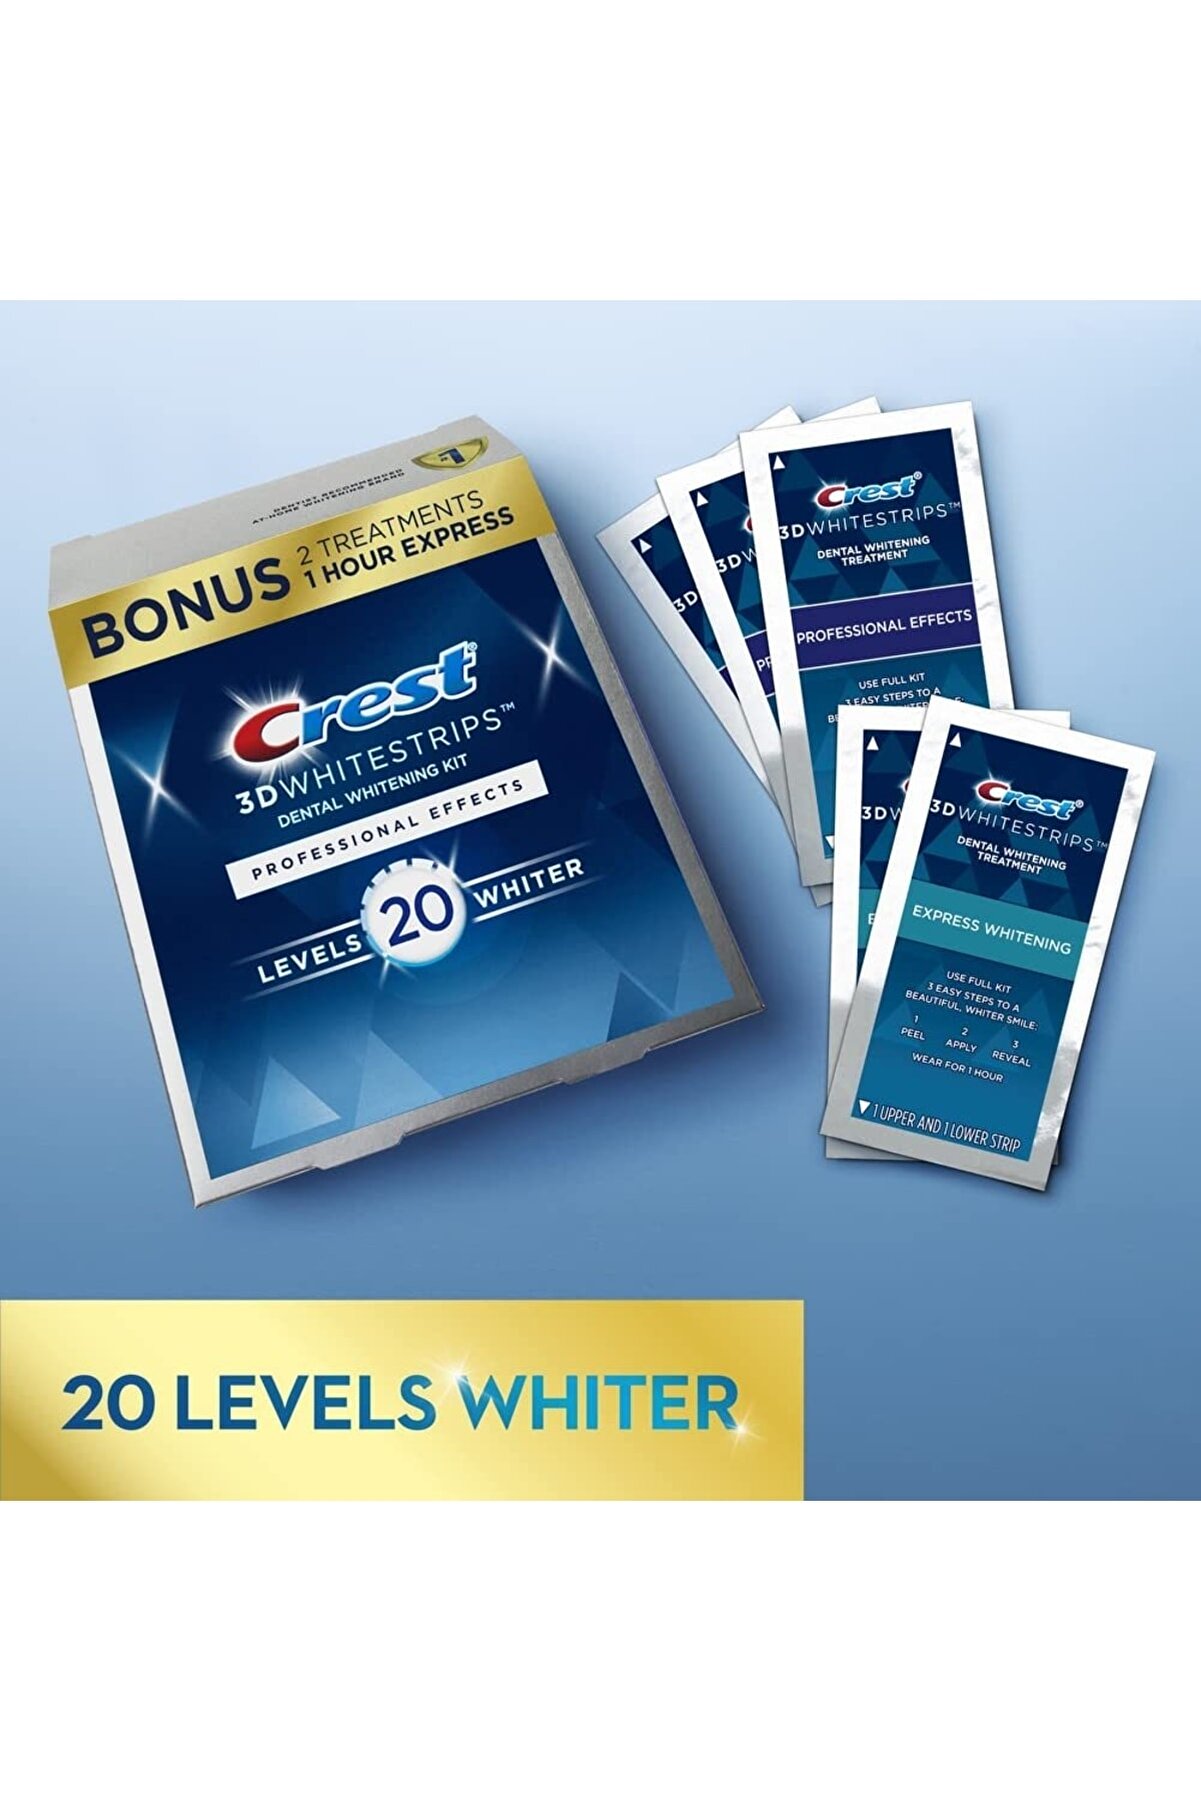 CREST 3d Whitestrips Professional Effects Kit 20 Paket 40bant + 2 Paket Bonus